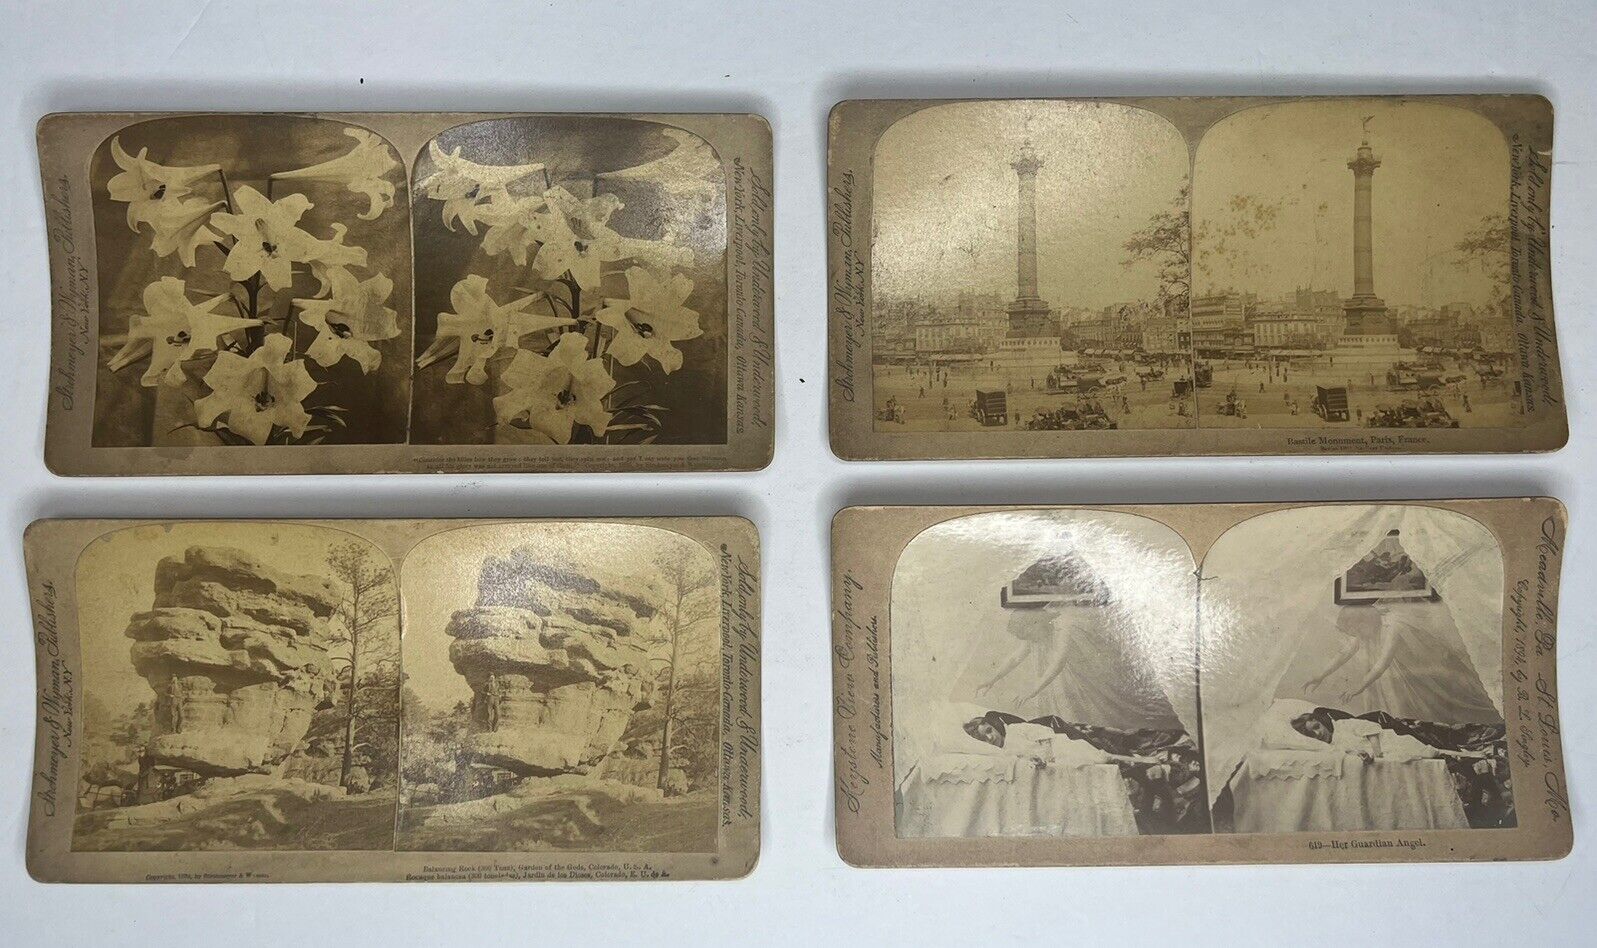 12 Vintage 1894 Stereoscope Cards Published By Strohmeyer & Wyman. Rare